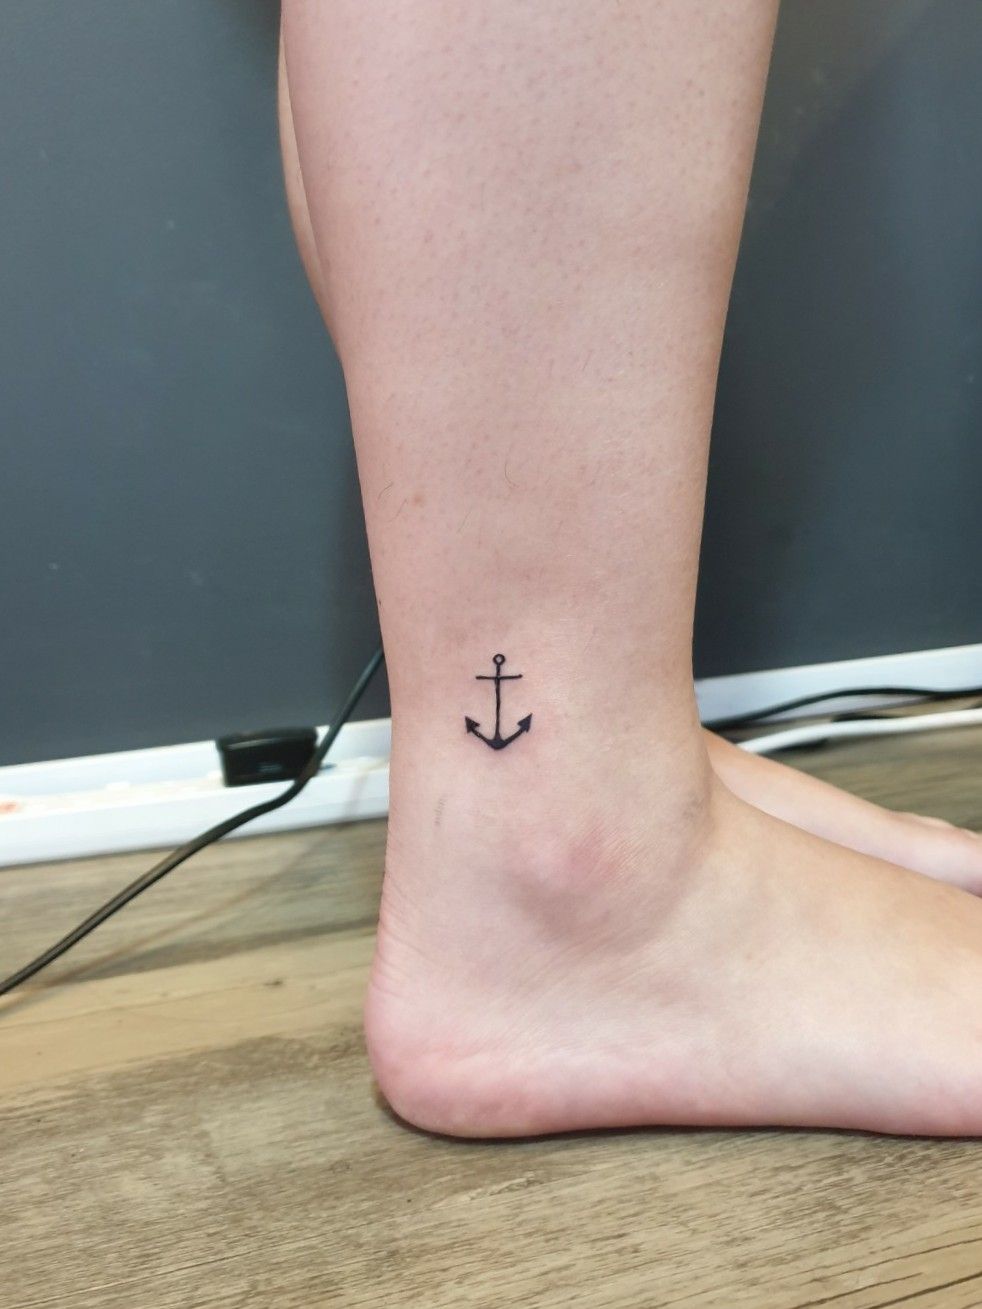 Small Wrist Tattoo Anchor Heart